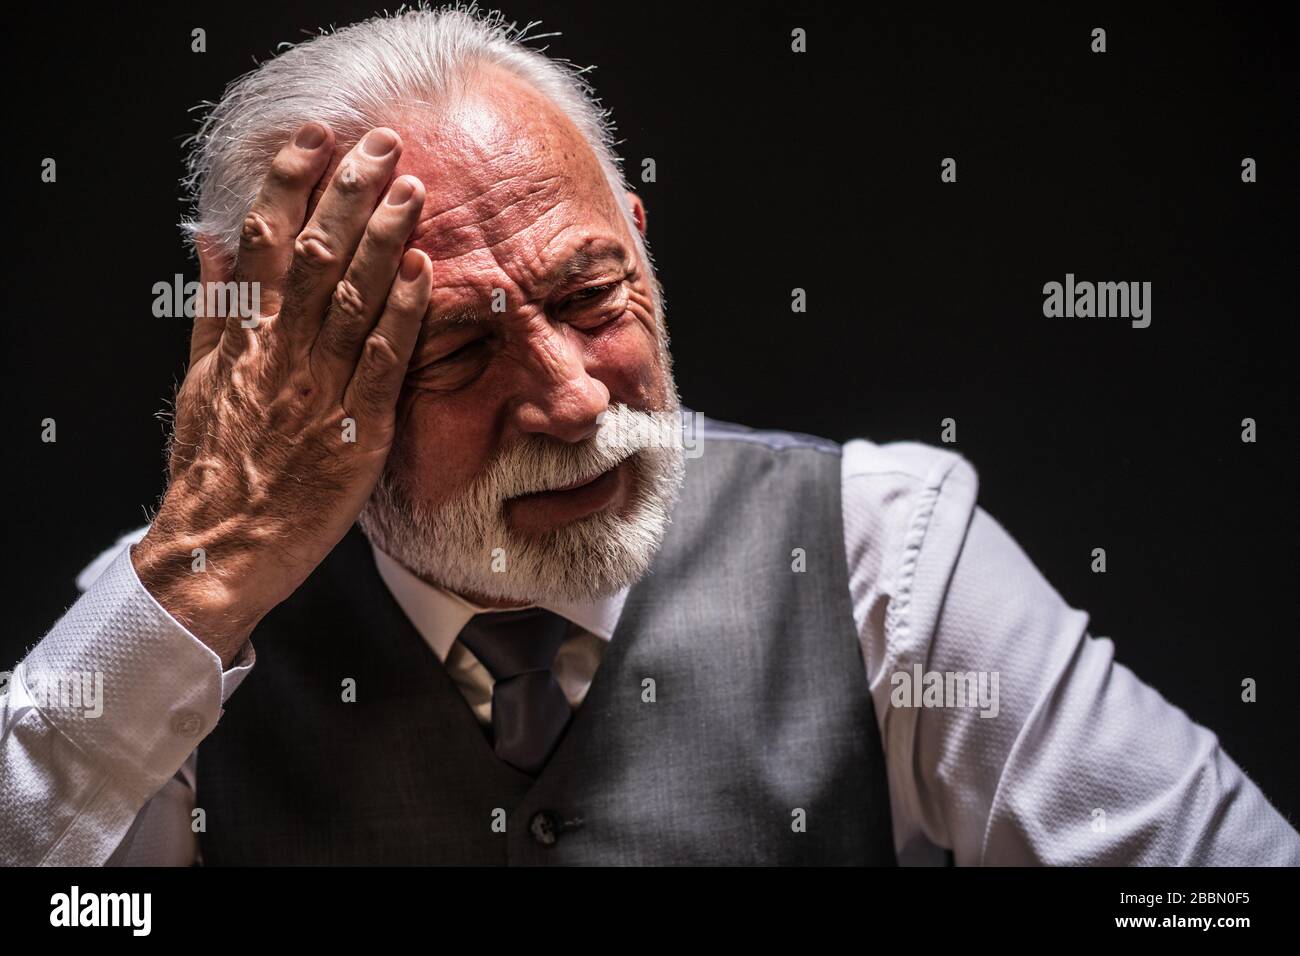 Portrait of depressed senior man on black background. Stock Photo